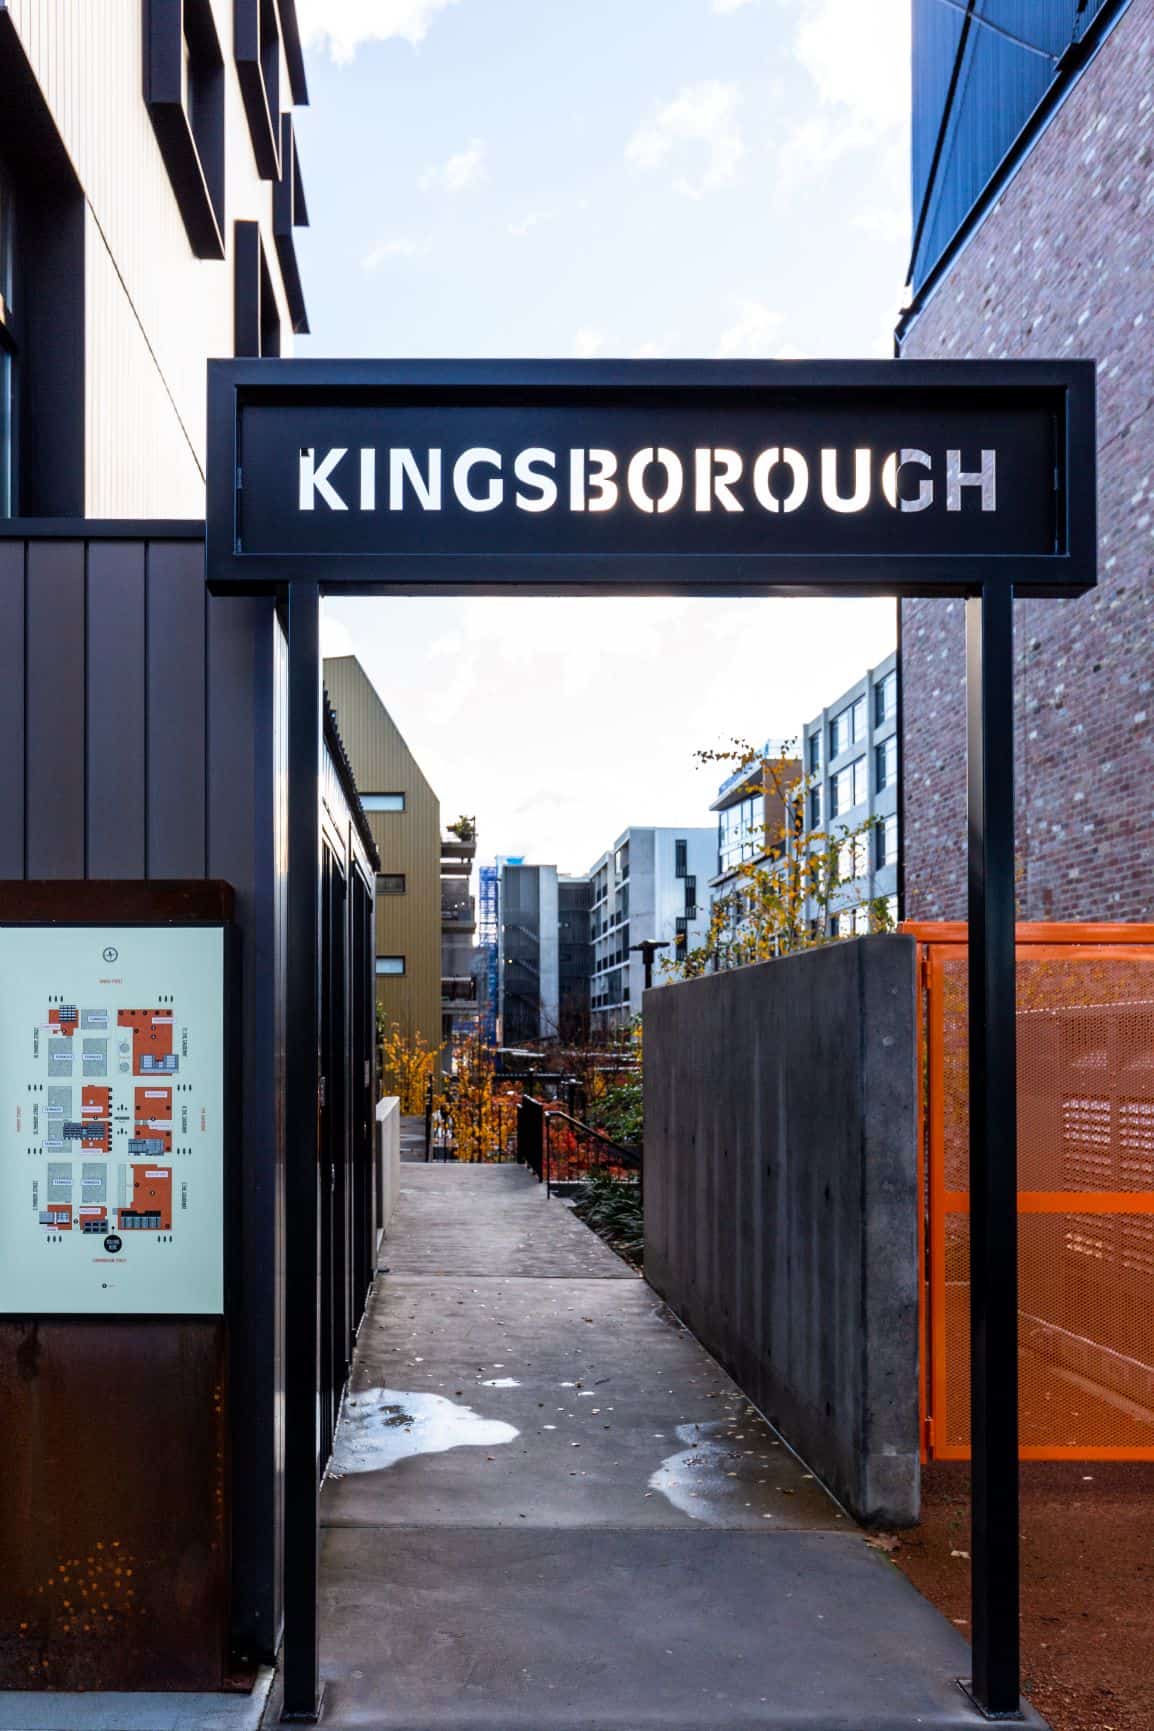 Kingsborough sign